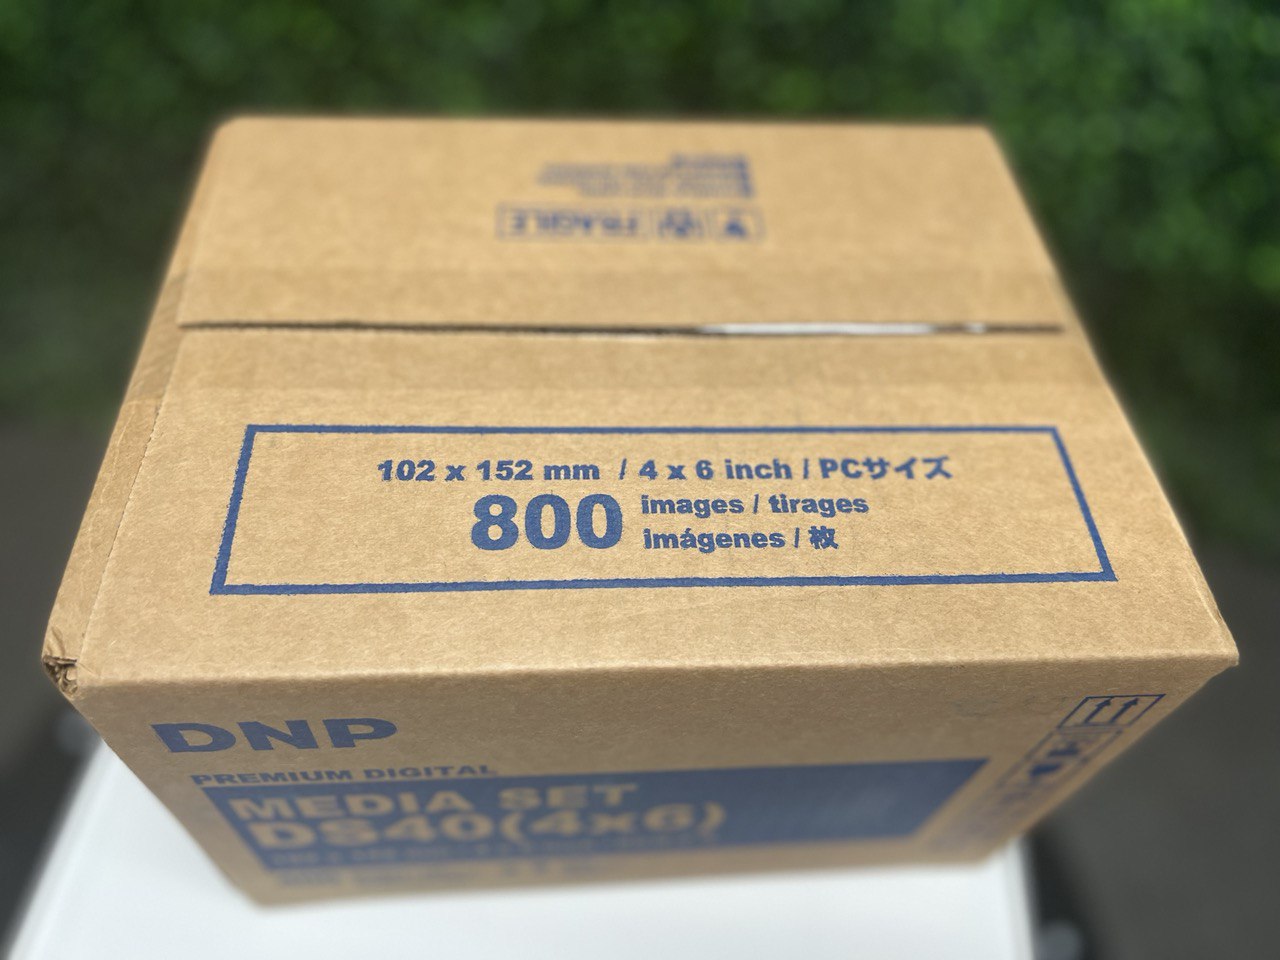 FREE SHIPPING - DS40 (4x6) Media Kit Set